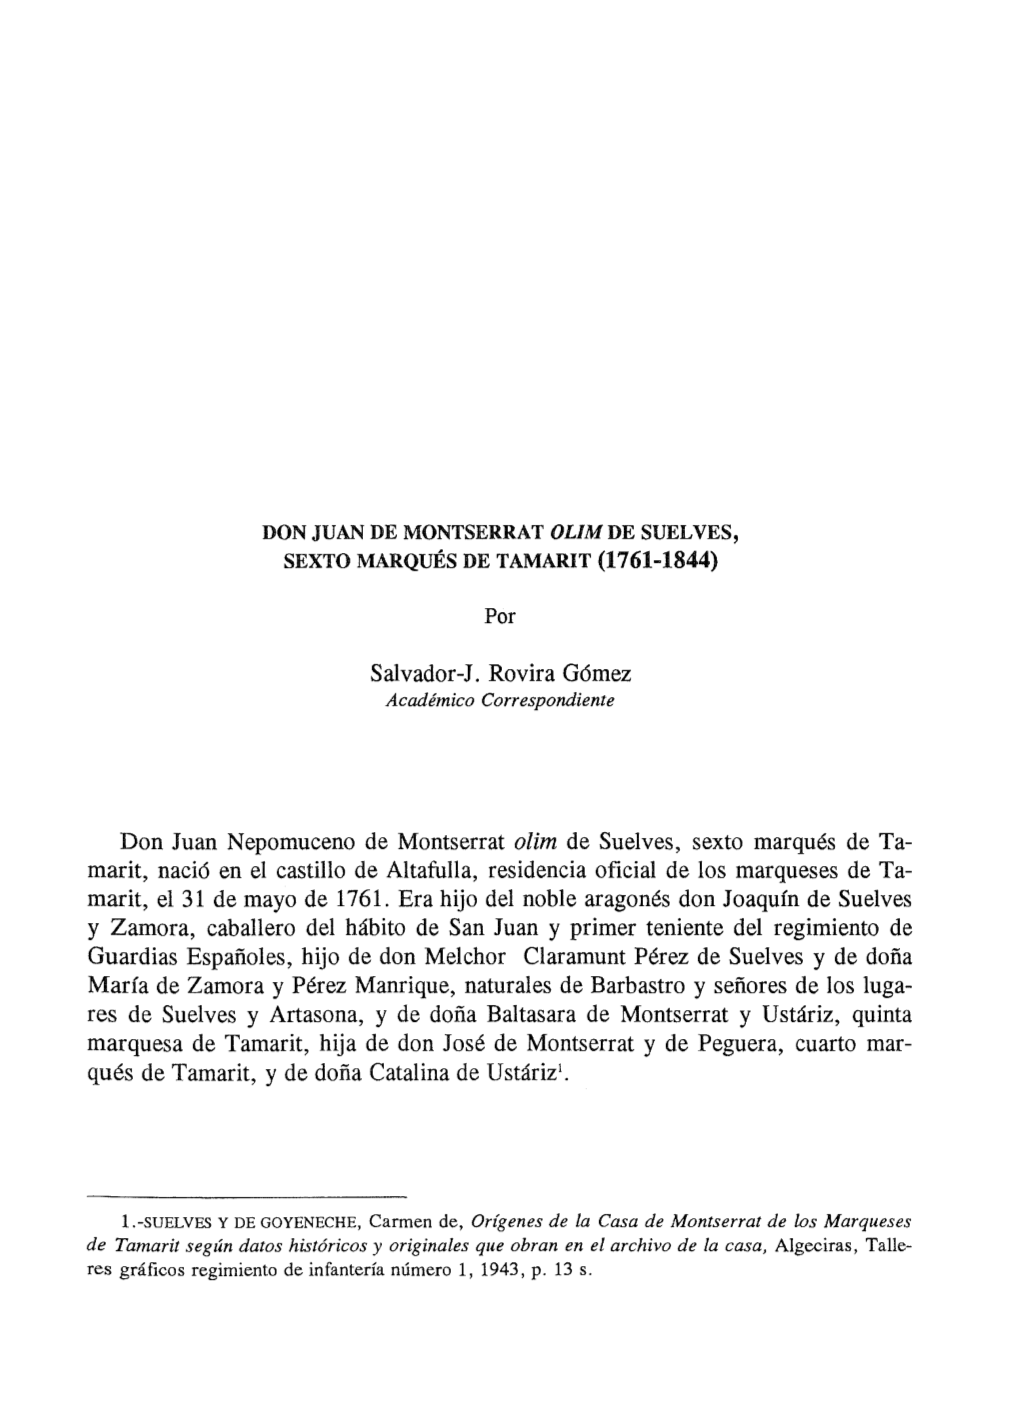 Salvador-J. Rovira Gómez Don Juan Nepomuceno De Montserrat Olim De